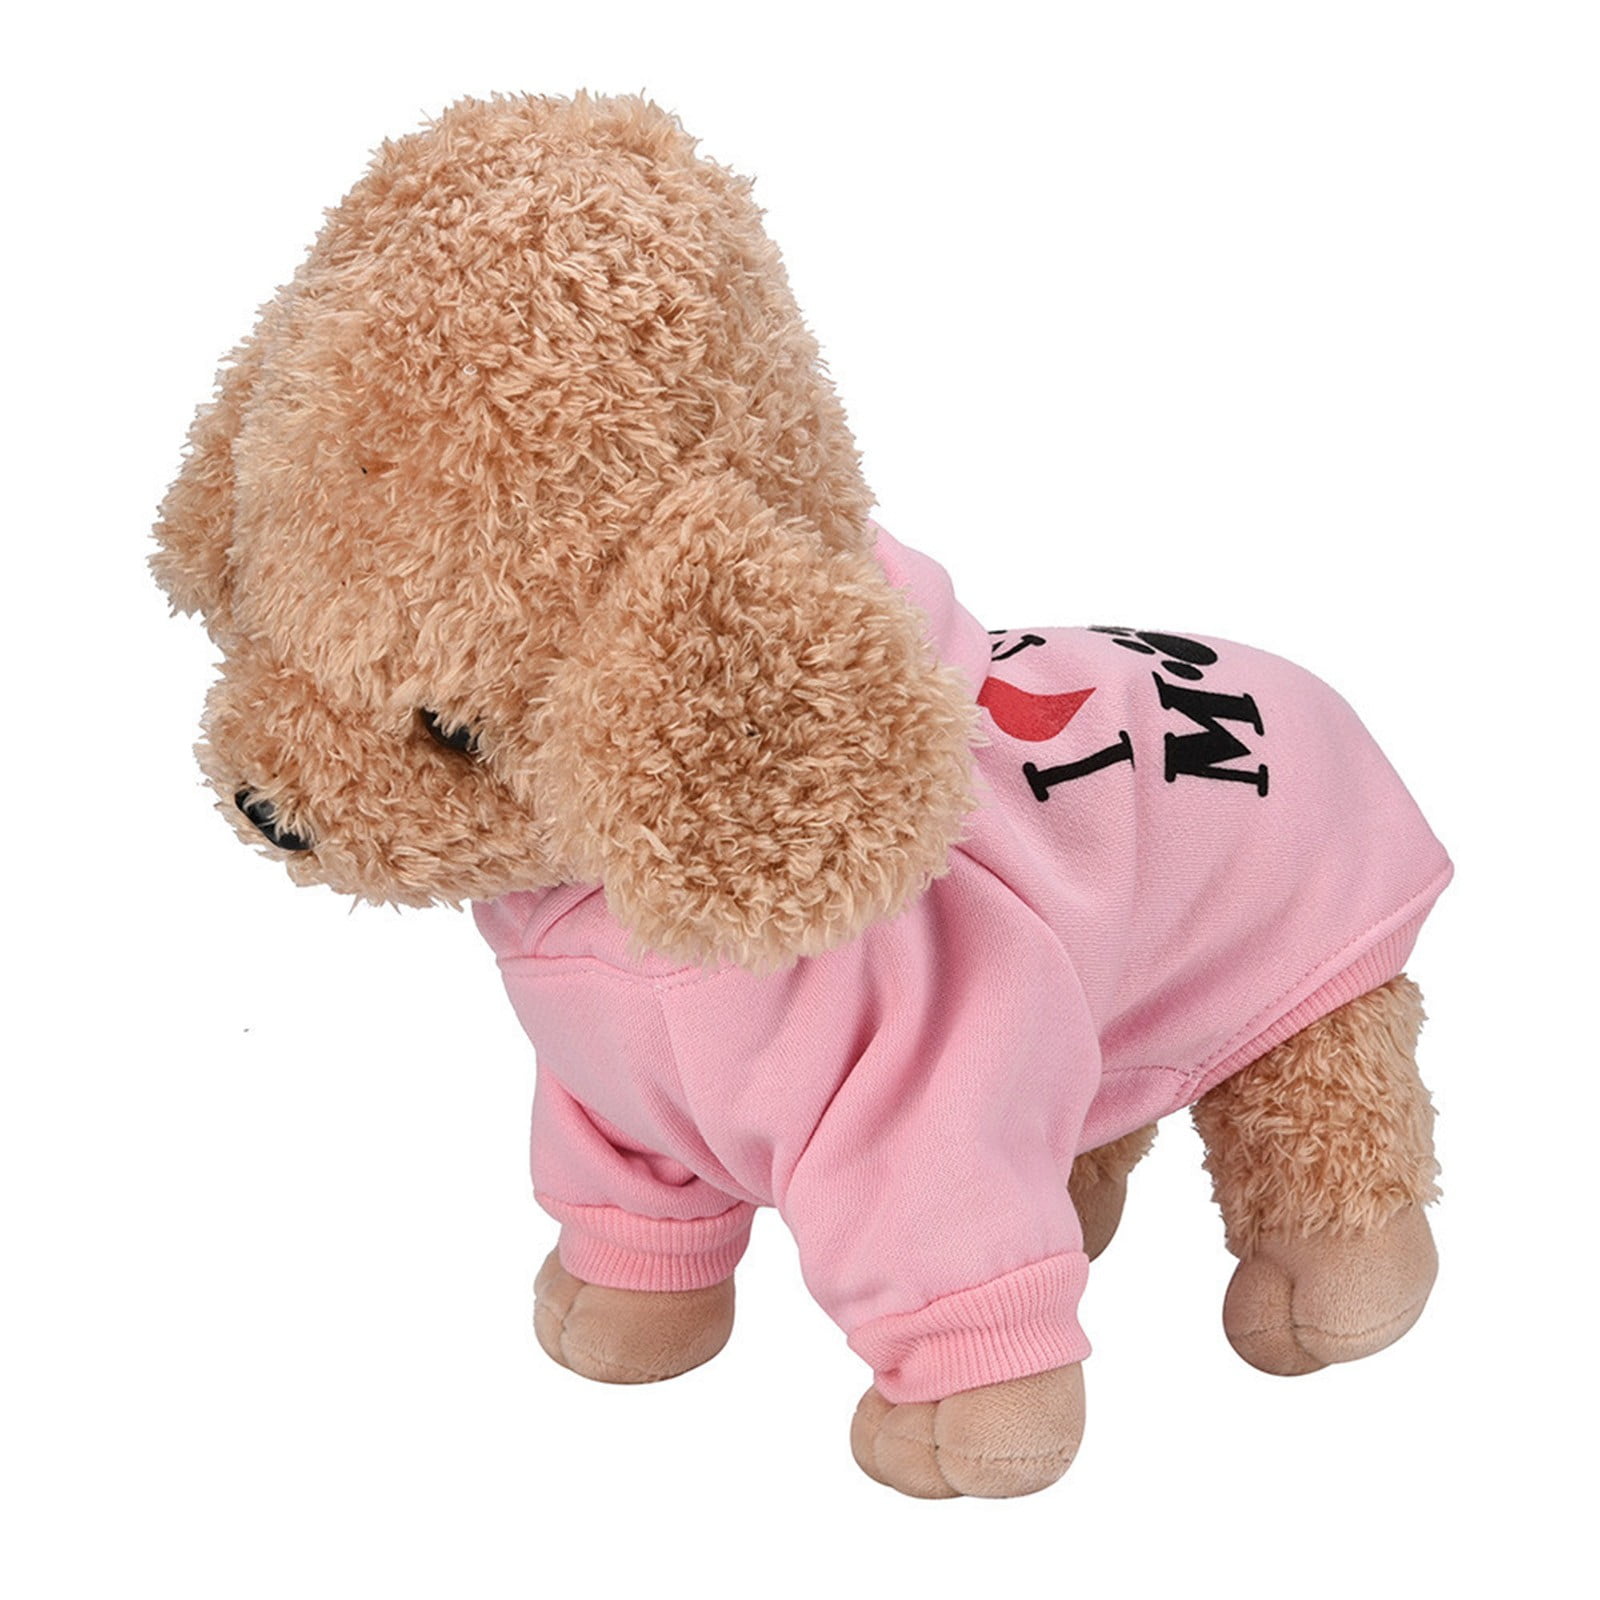 Small Pet Dog Clothes Fashion Costume Puppy Cotton Blend T-Shirt Apparel Clothes 